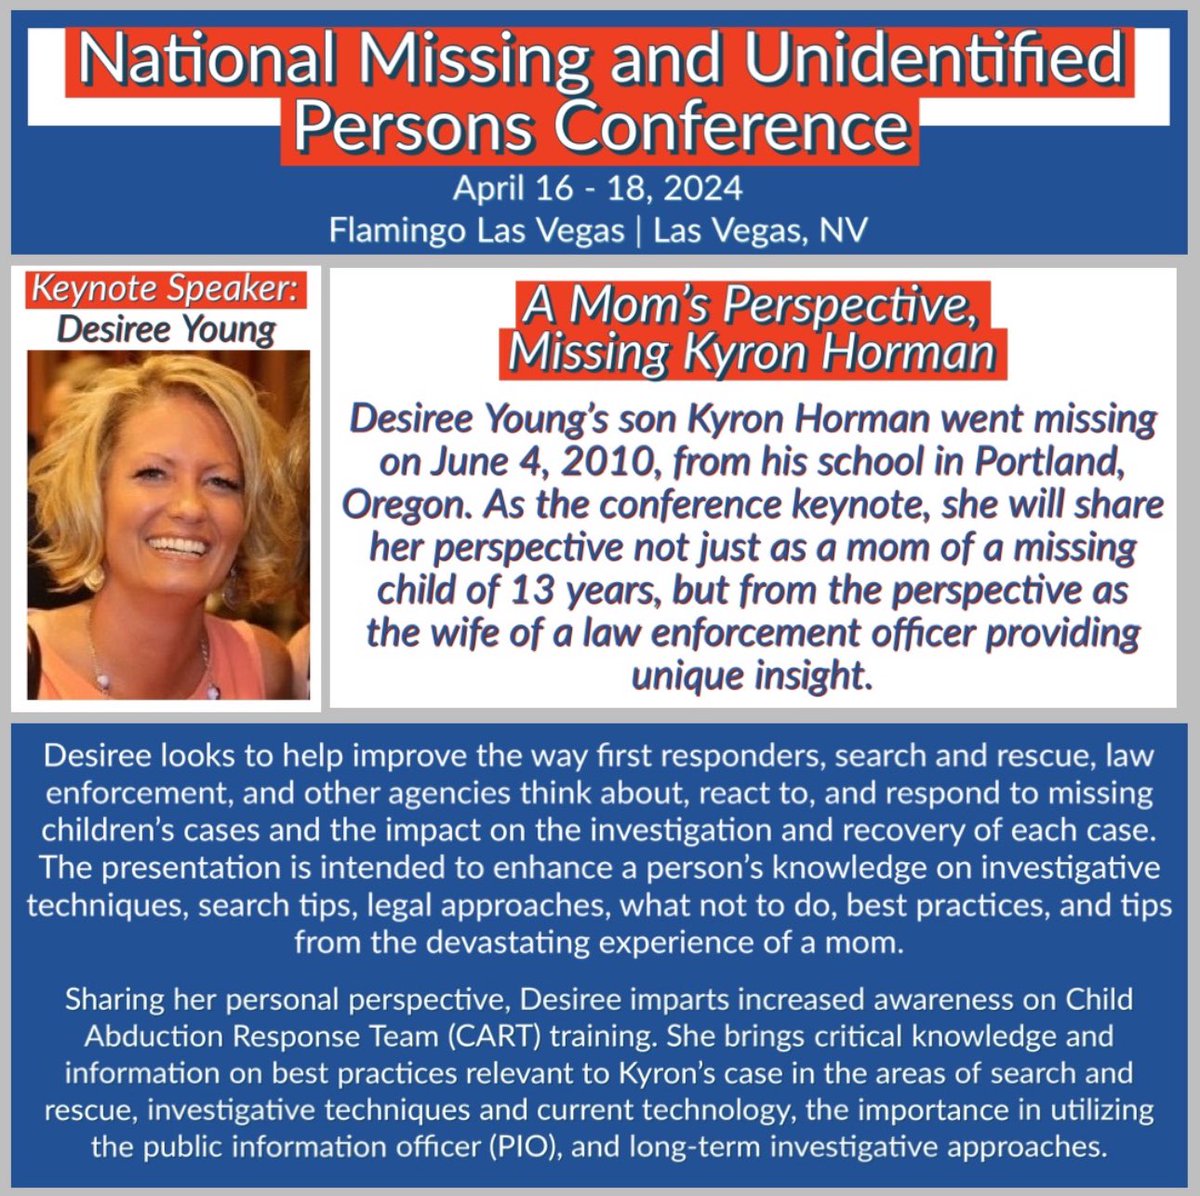 National Missing and Unidentified Persons Conference April 16 - 18, 2024 Flamingo Las Vegas | Las Vegas, NV Keynote Speaker: Desiree Young @VoteVasquez24 @MultCoSO @MultCoDA @DAMikeSchmidt @FBIPortland #MissingKyronHorman #NCJTC #MPU #CART #MissingPersons #NeverGiveUp